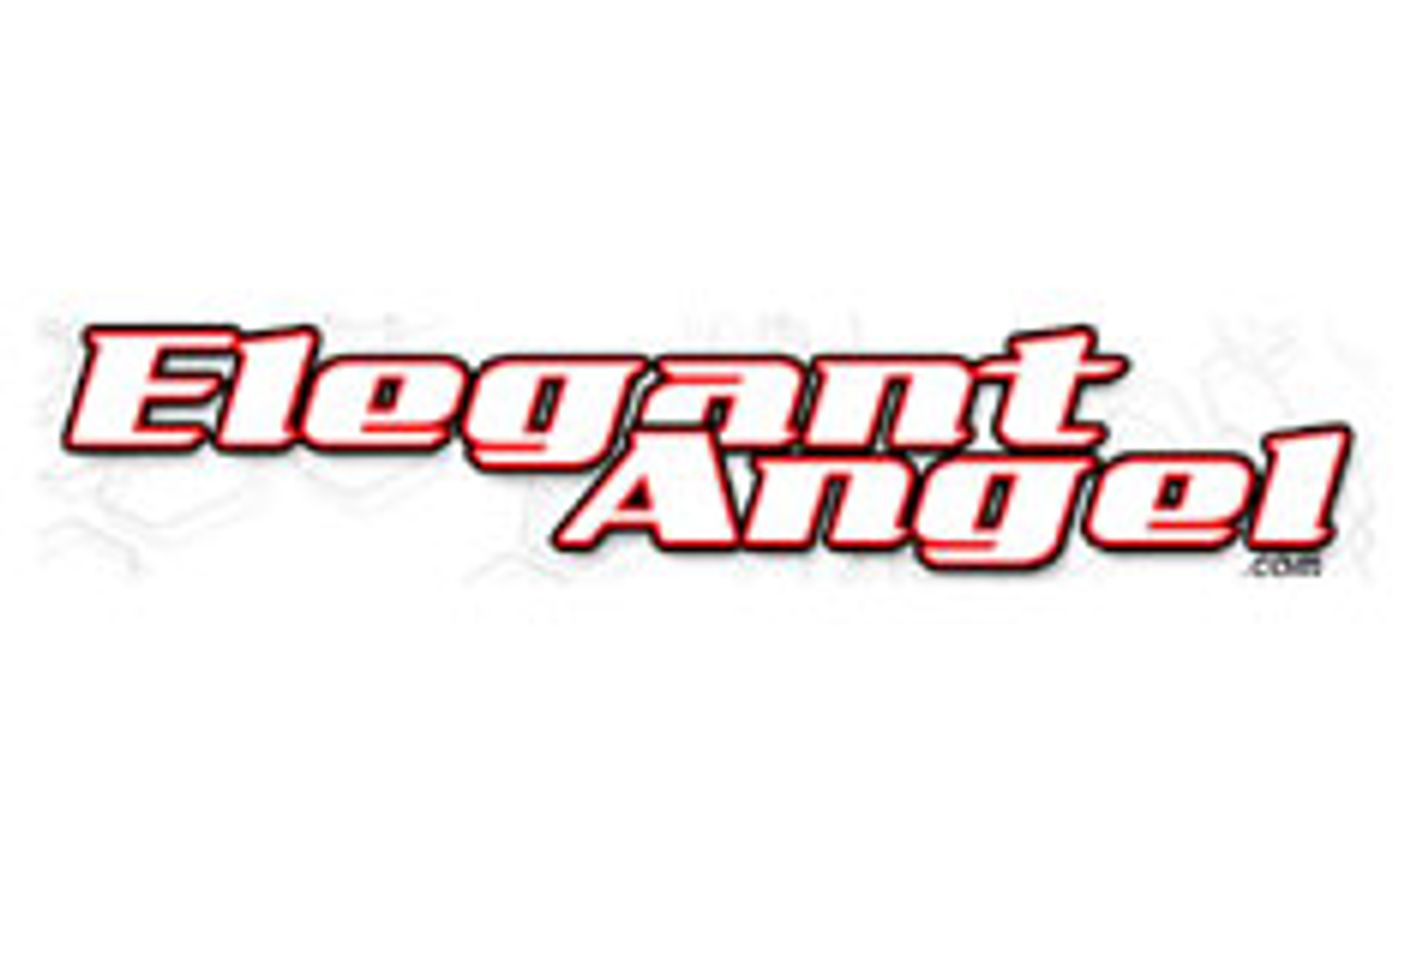 ElegantAngel.com Launches New Design, iPod Trailers